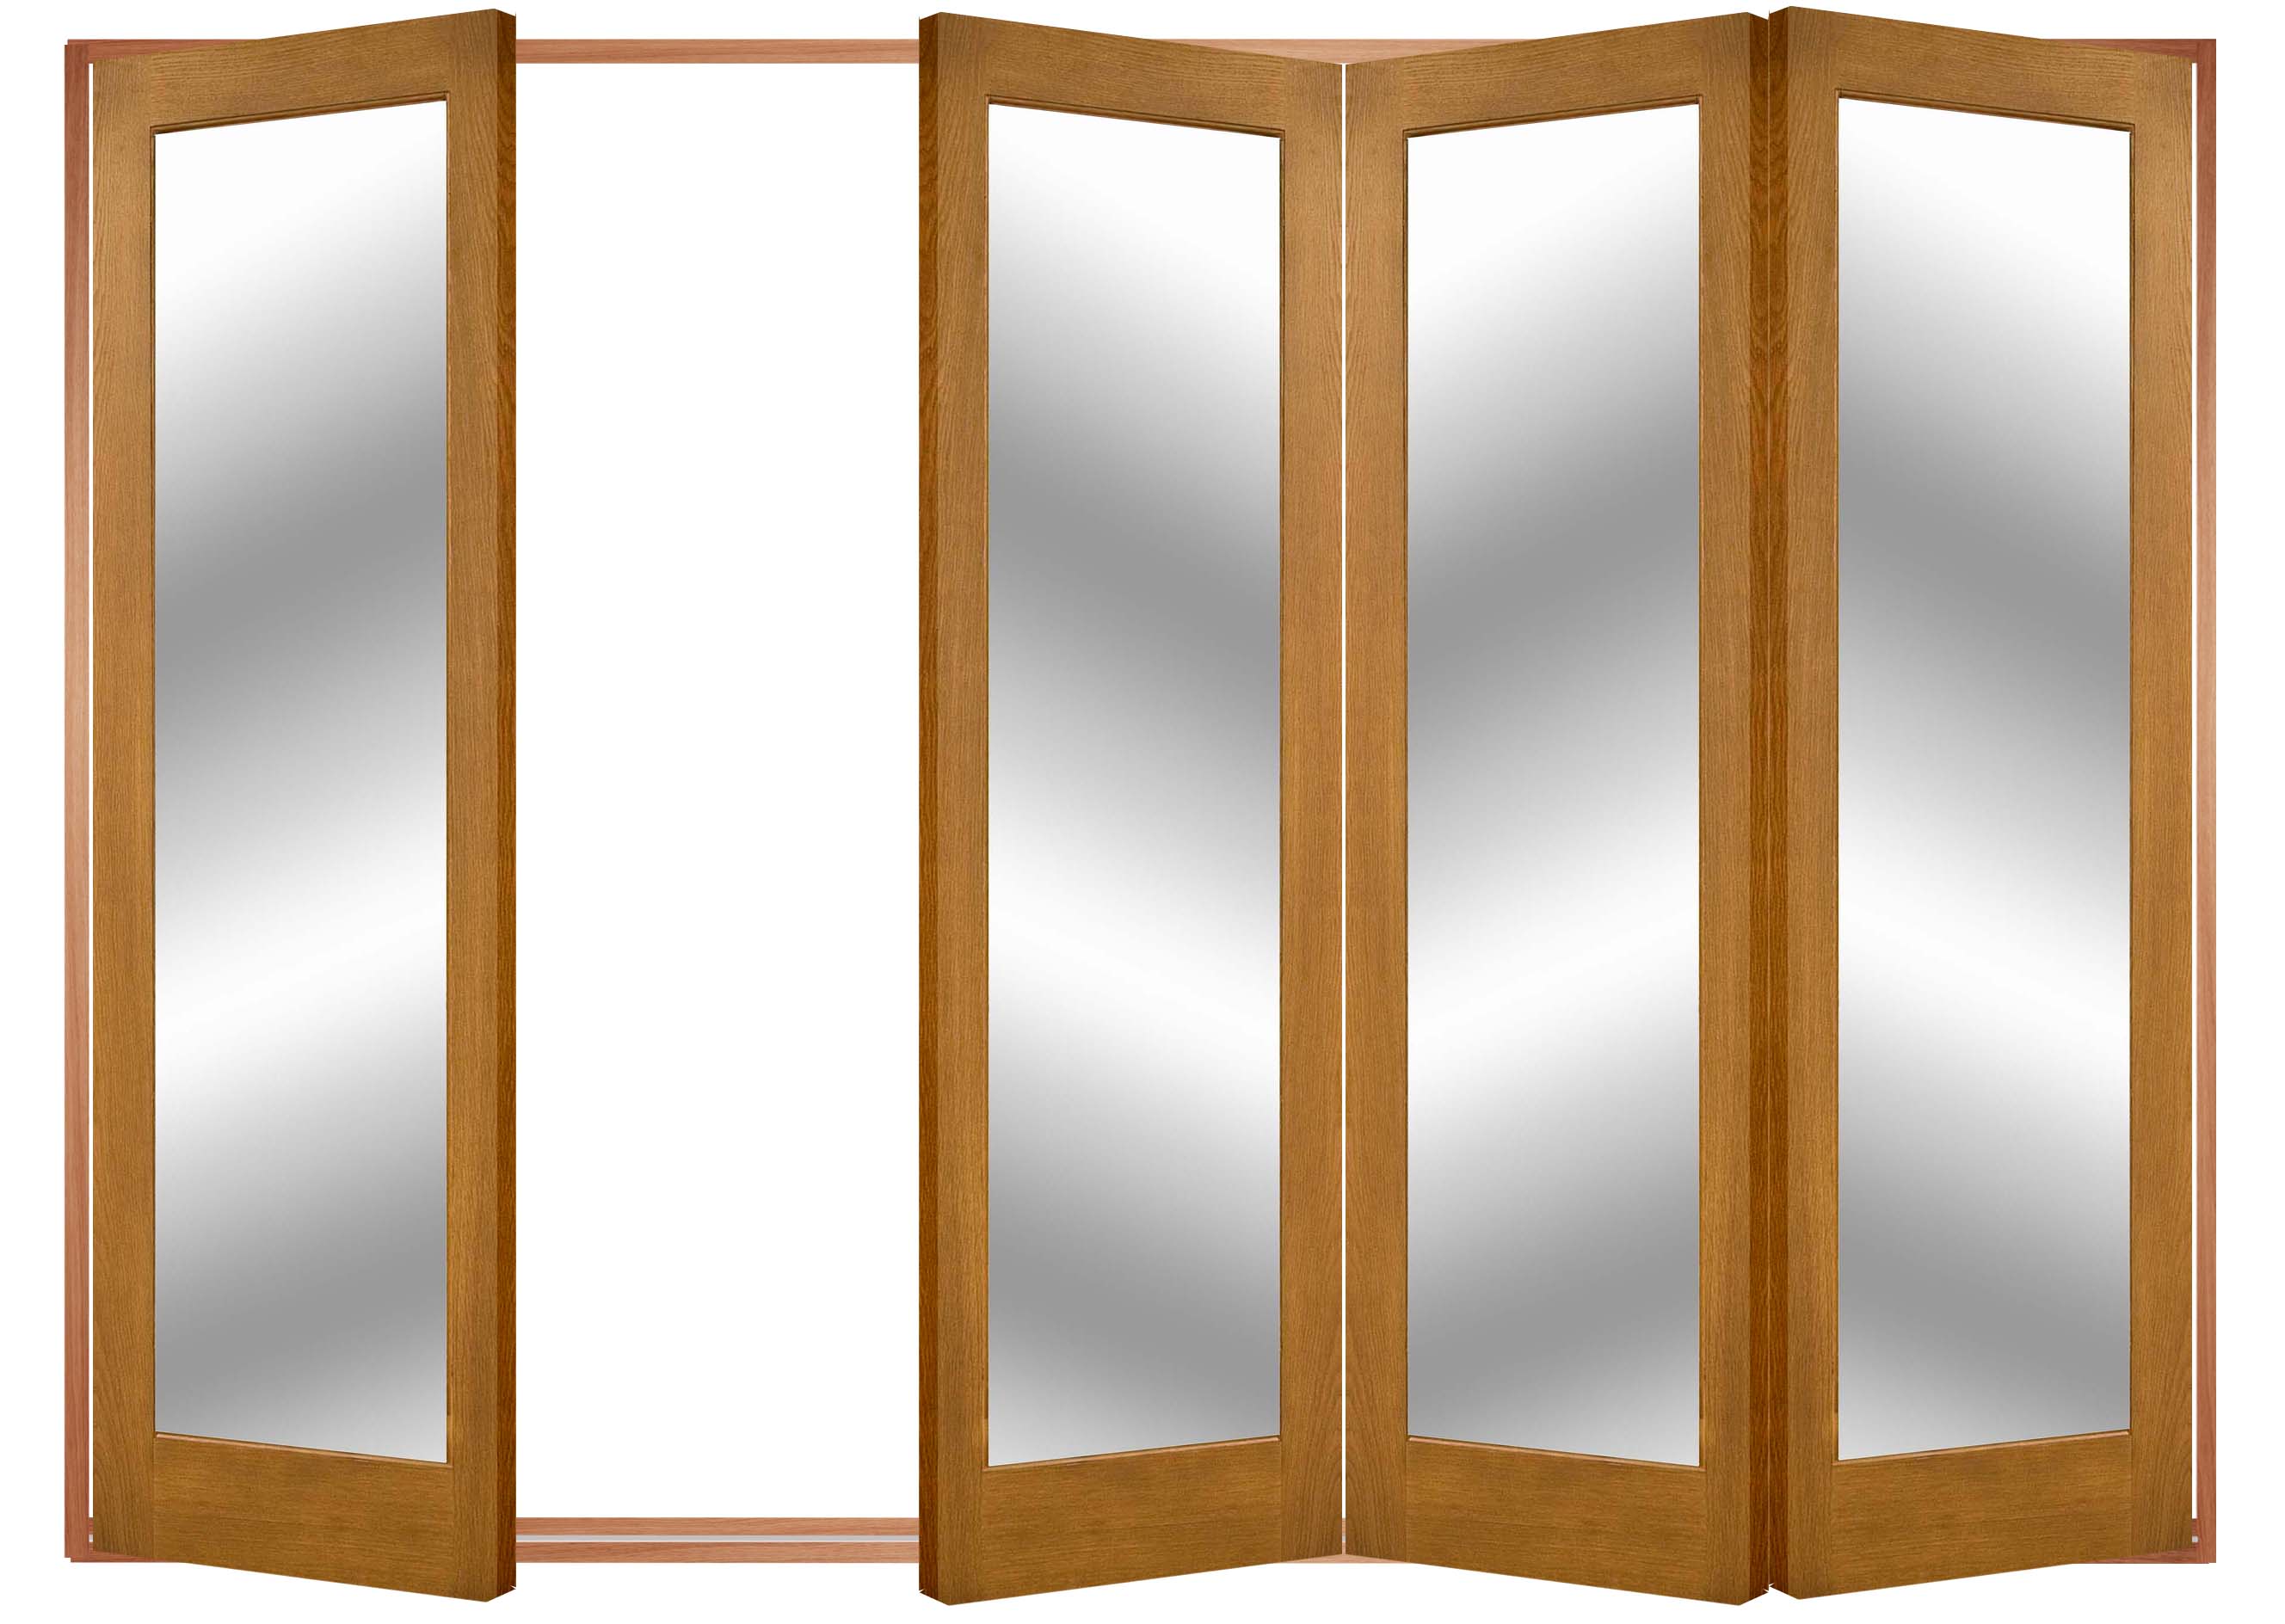 Reasons to install Interior sliding folding doors